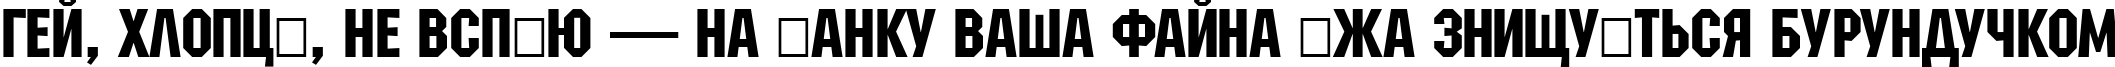 Пример написания шрифтом a_MachinaNova текста на украинском